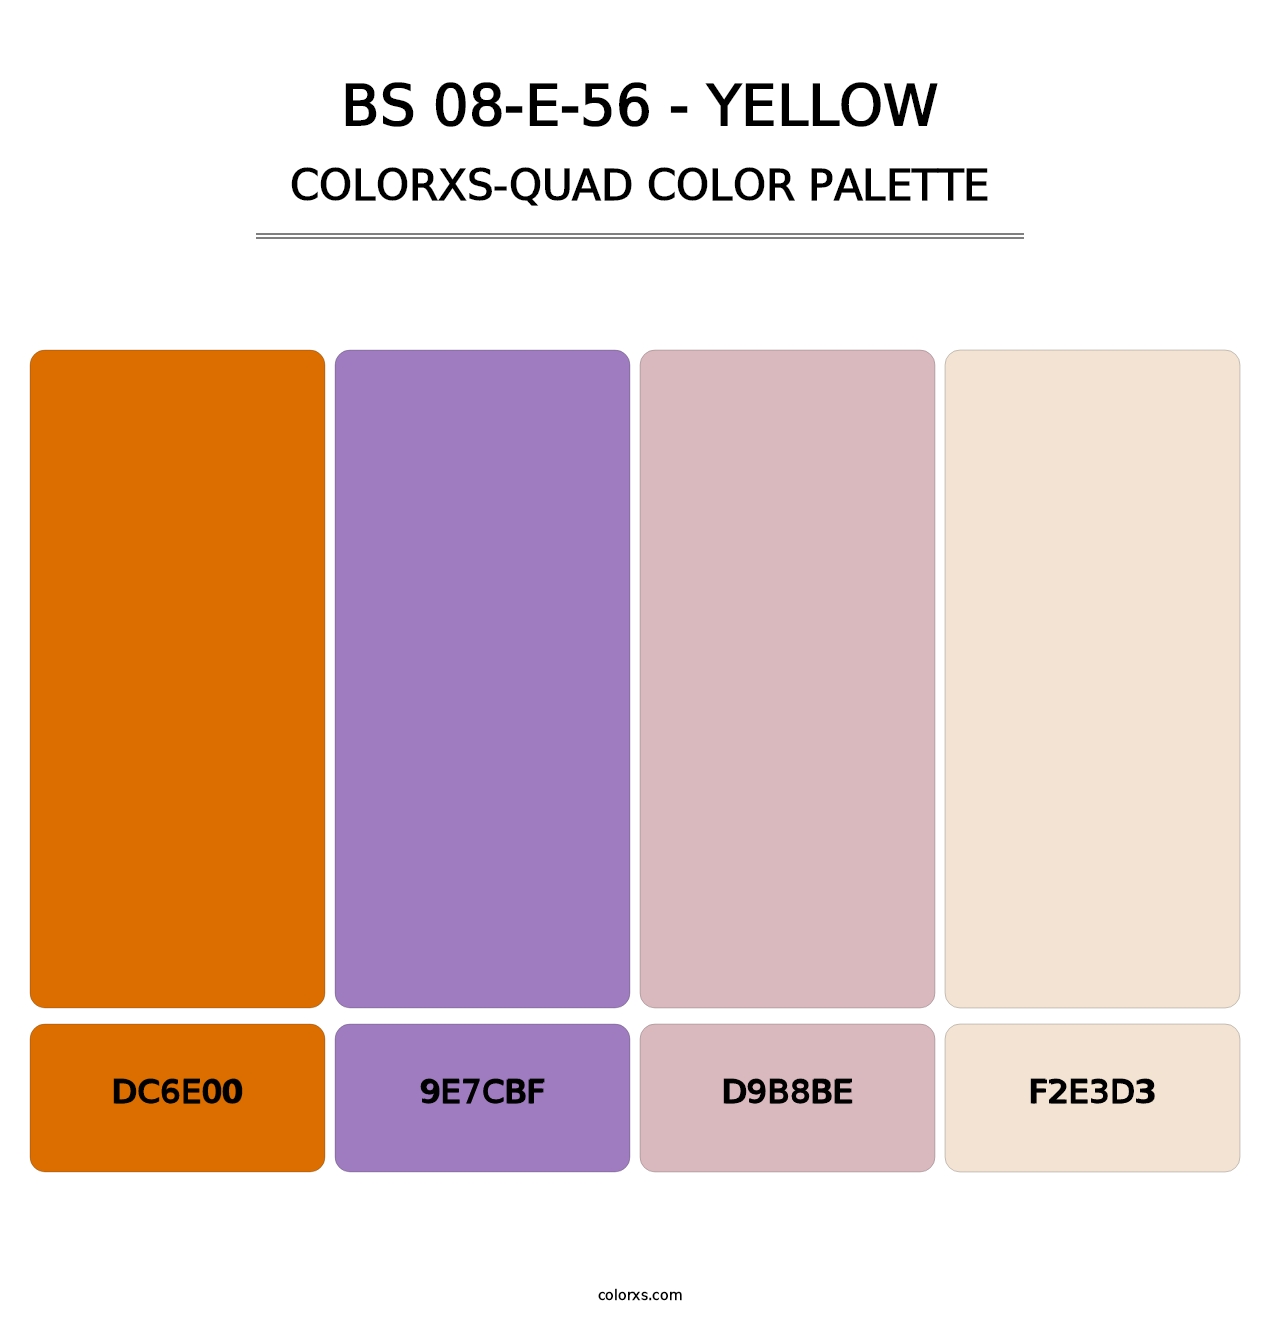 BS 08-E-56 - Yellow - Colorxs Quad Palette